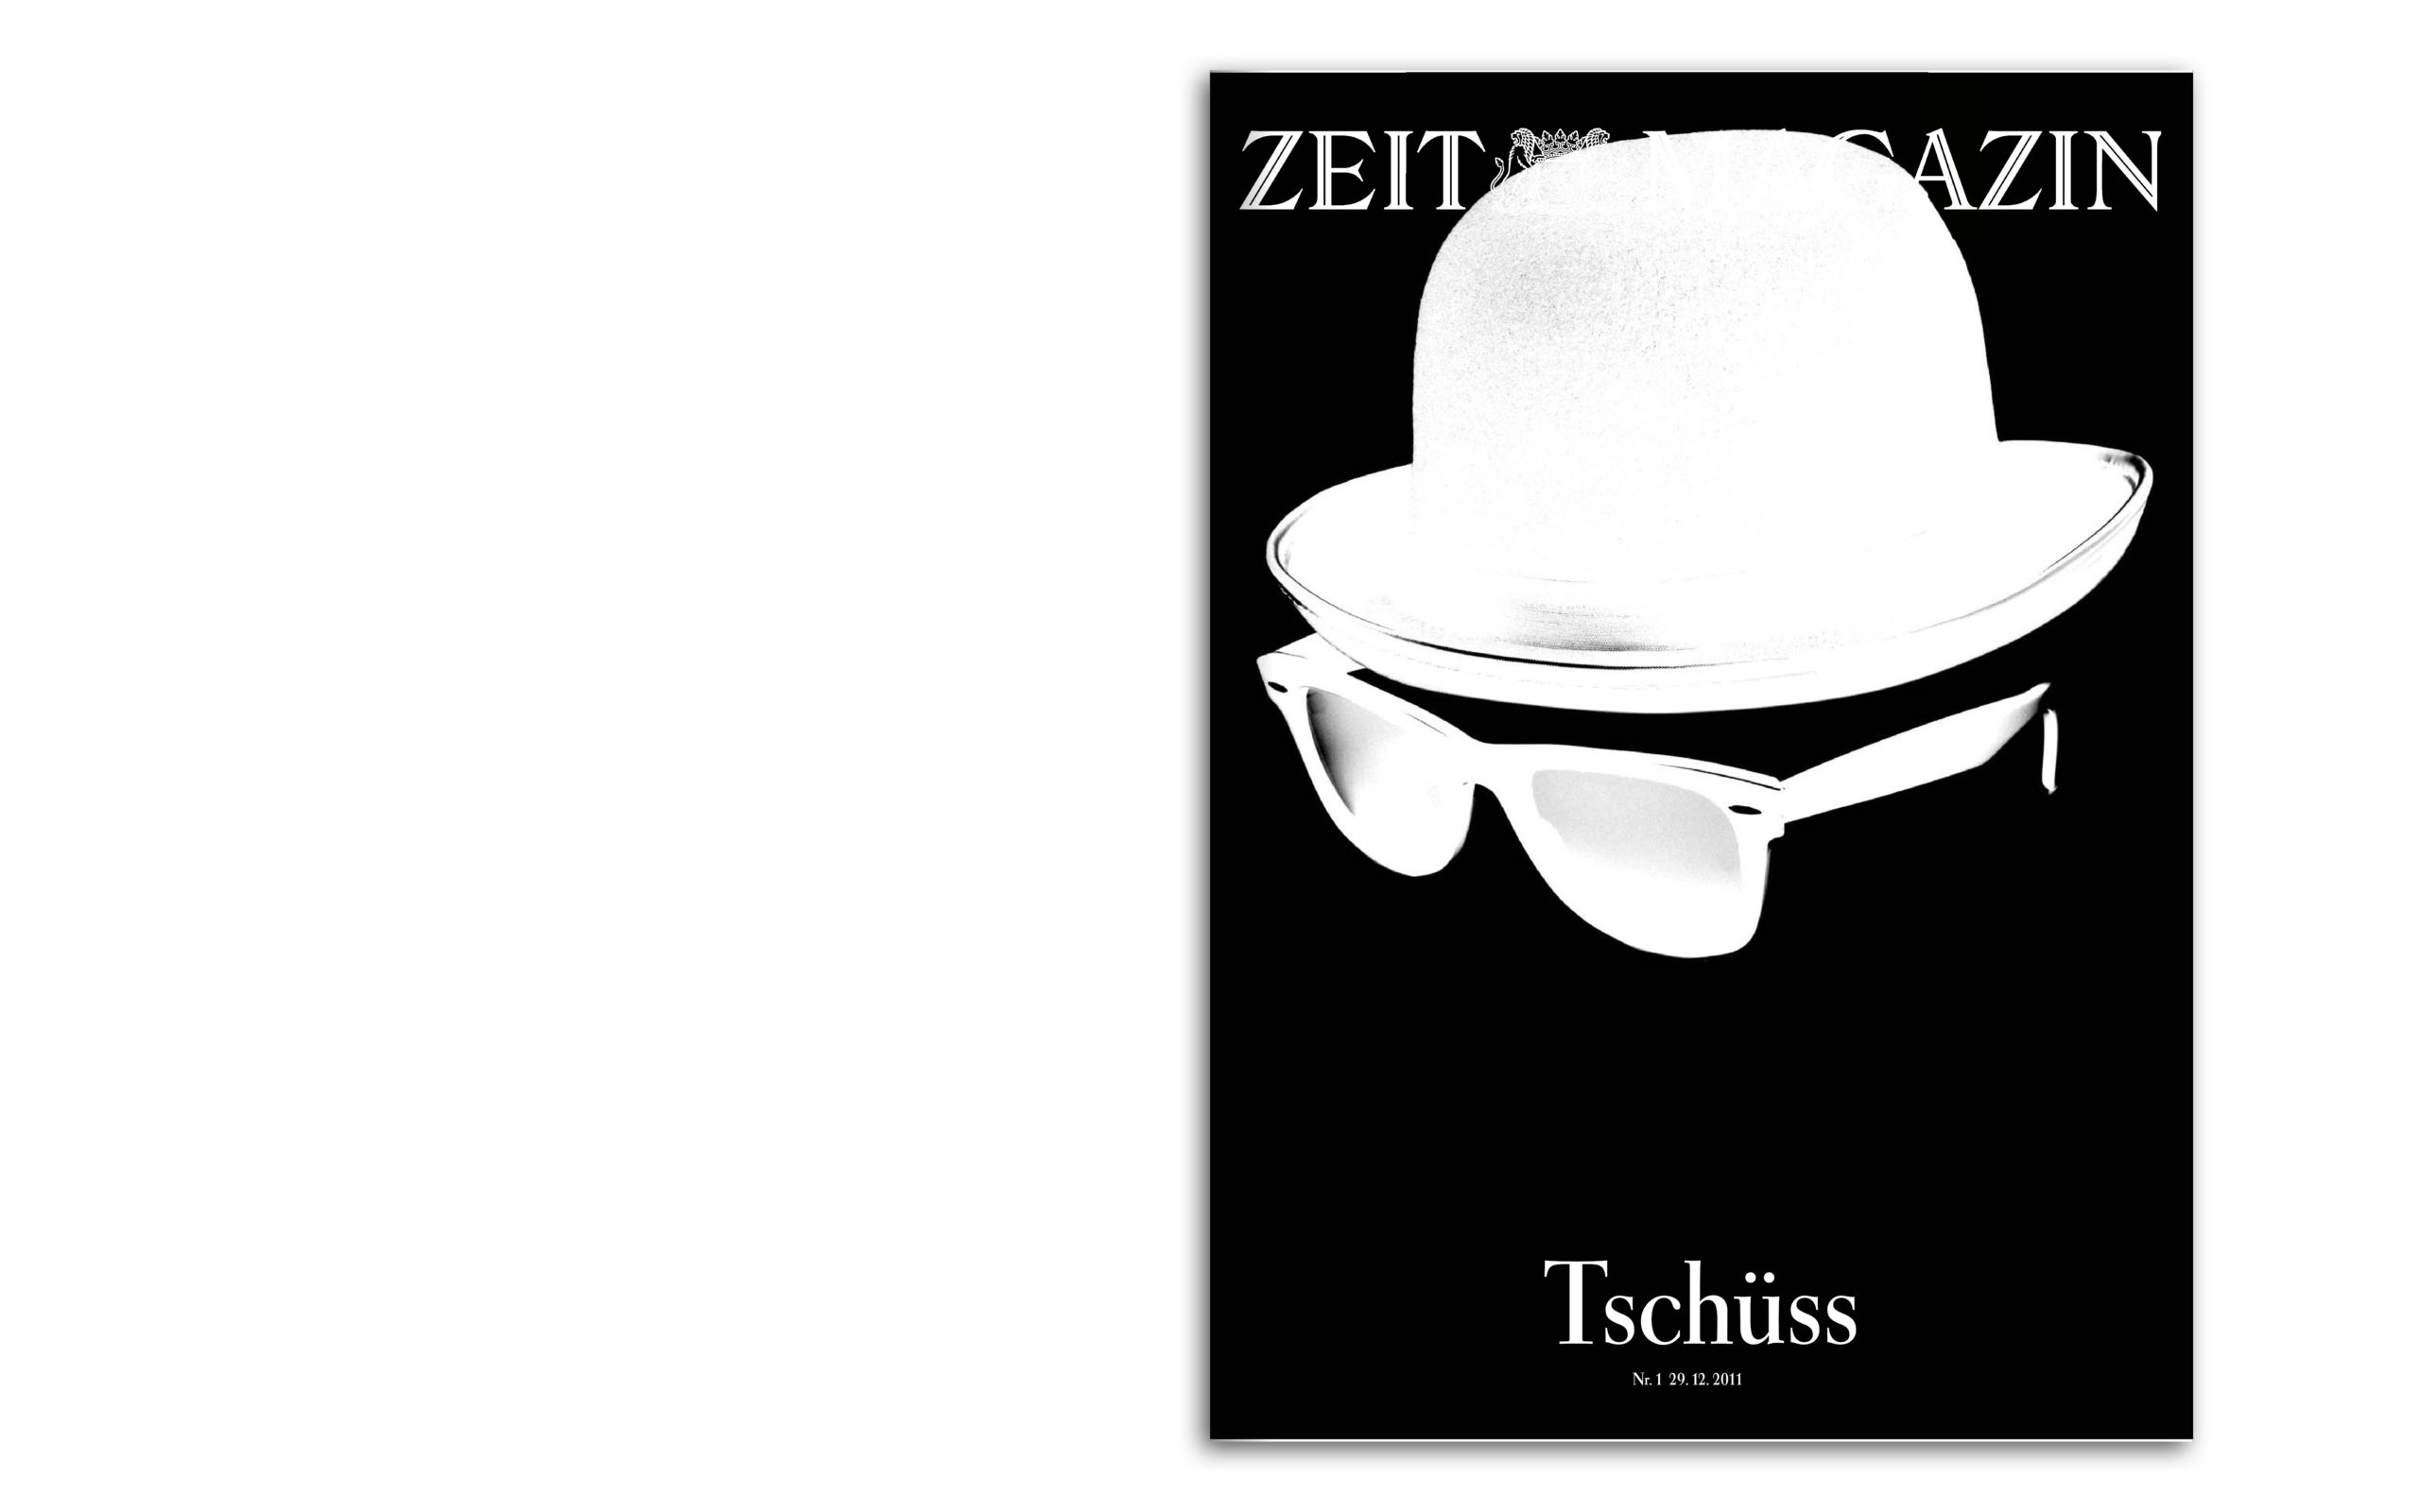 ZeitMagazin